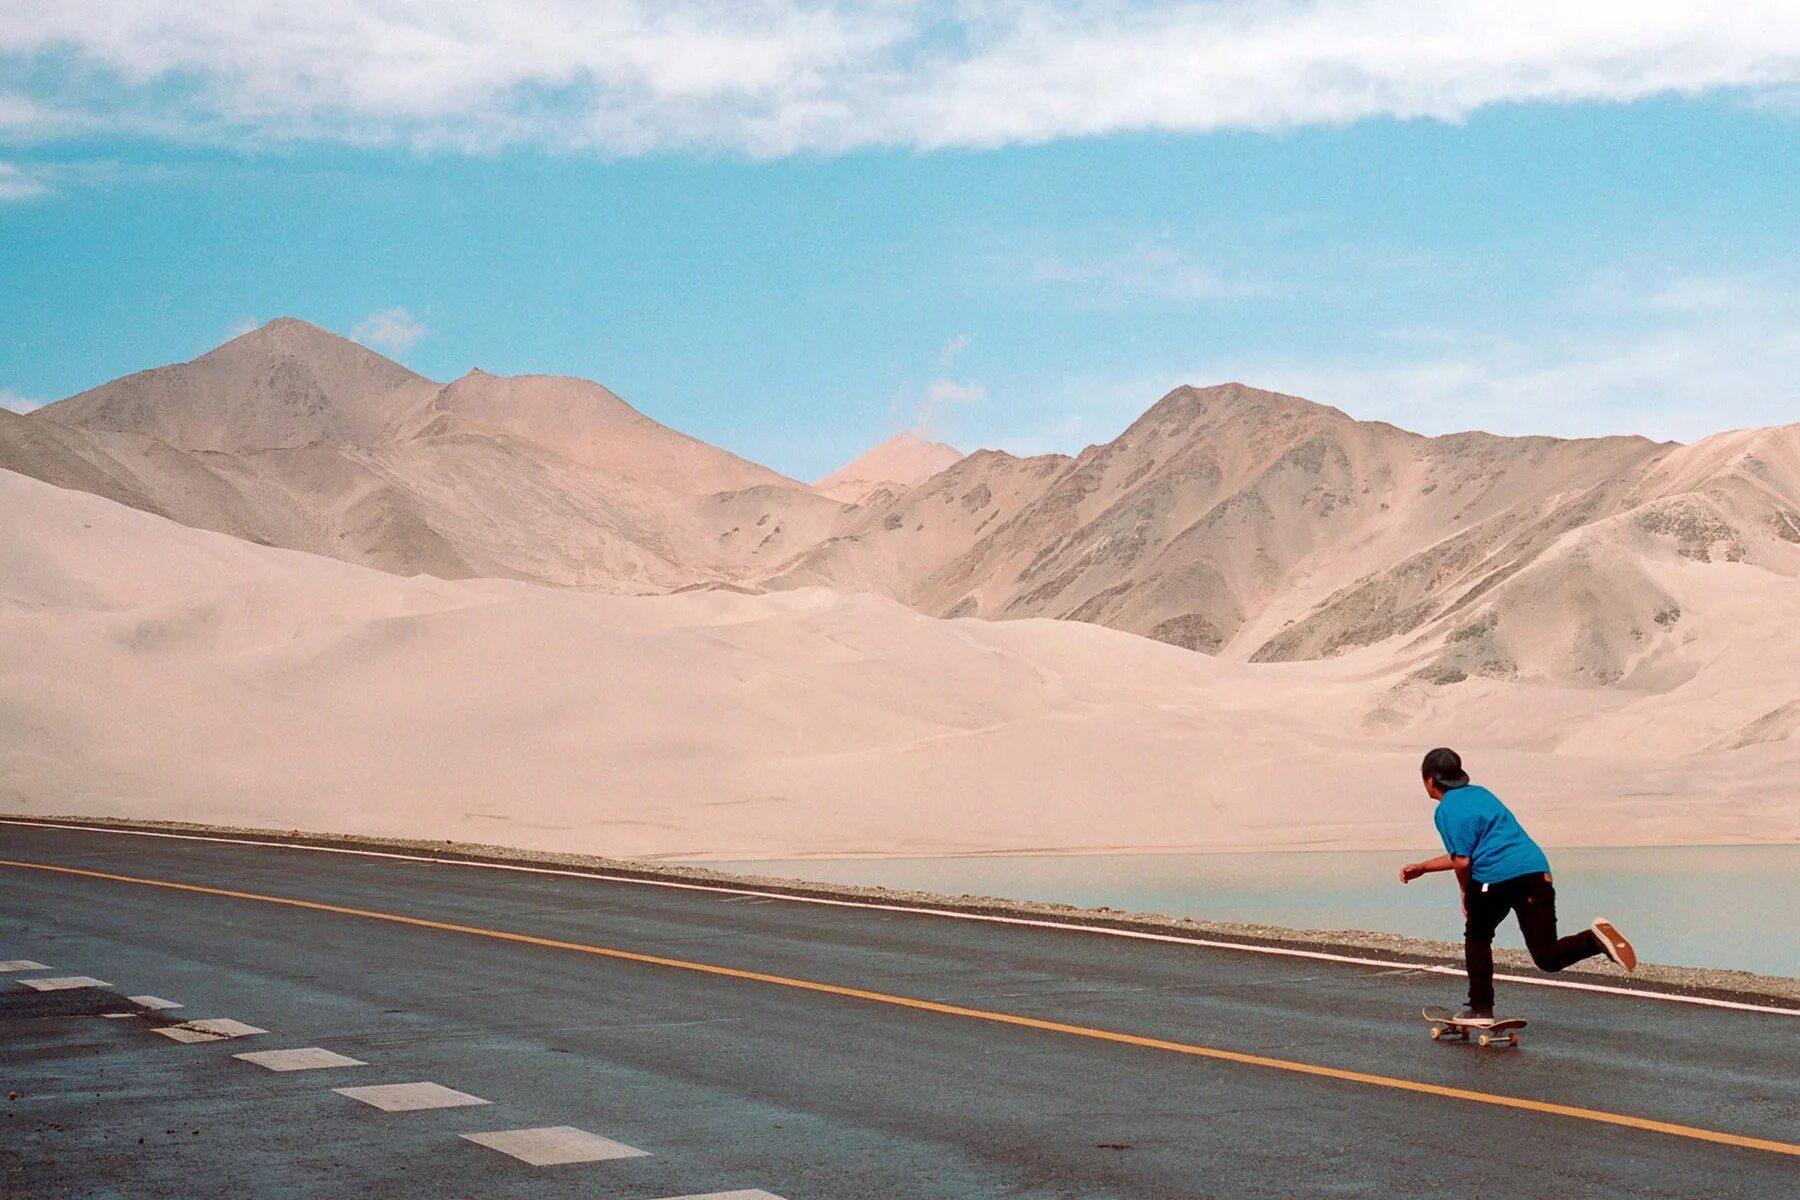 Ride around. Скейтборд в пустыне. Ароунд тхе ворлд. Skate around. Riding a Skateboard around the World.